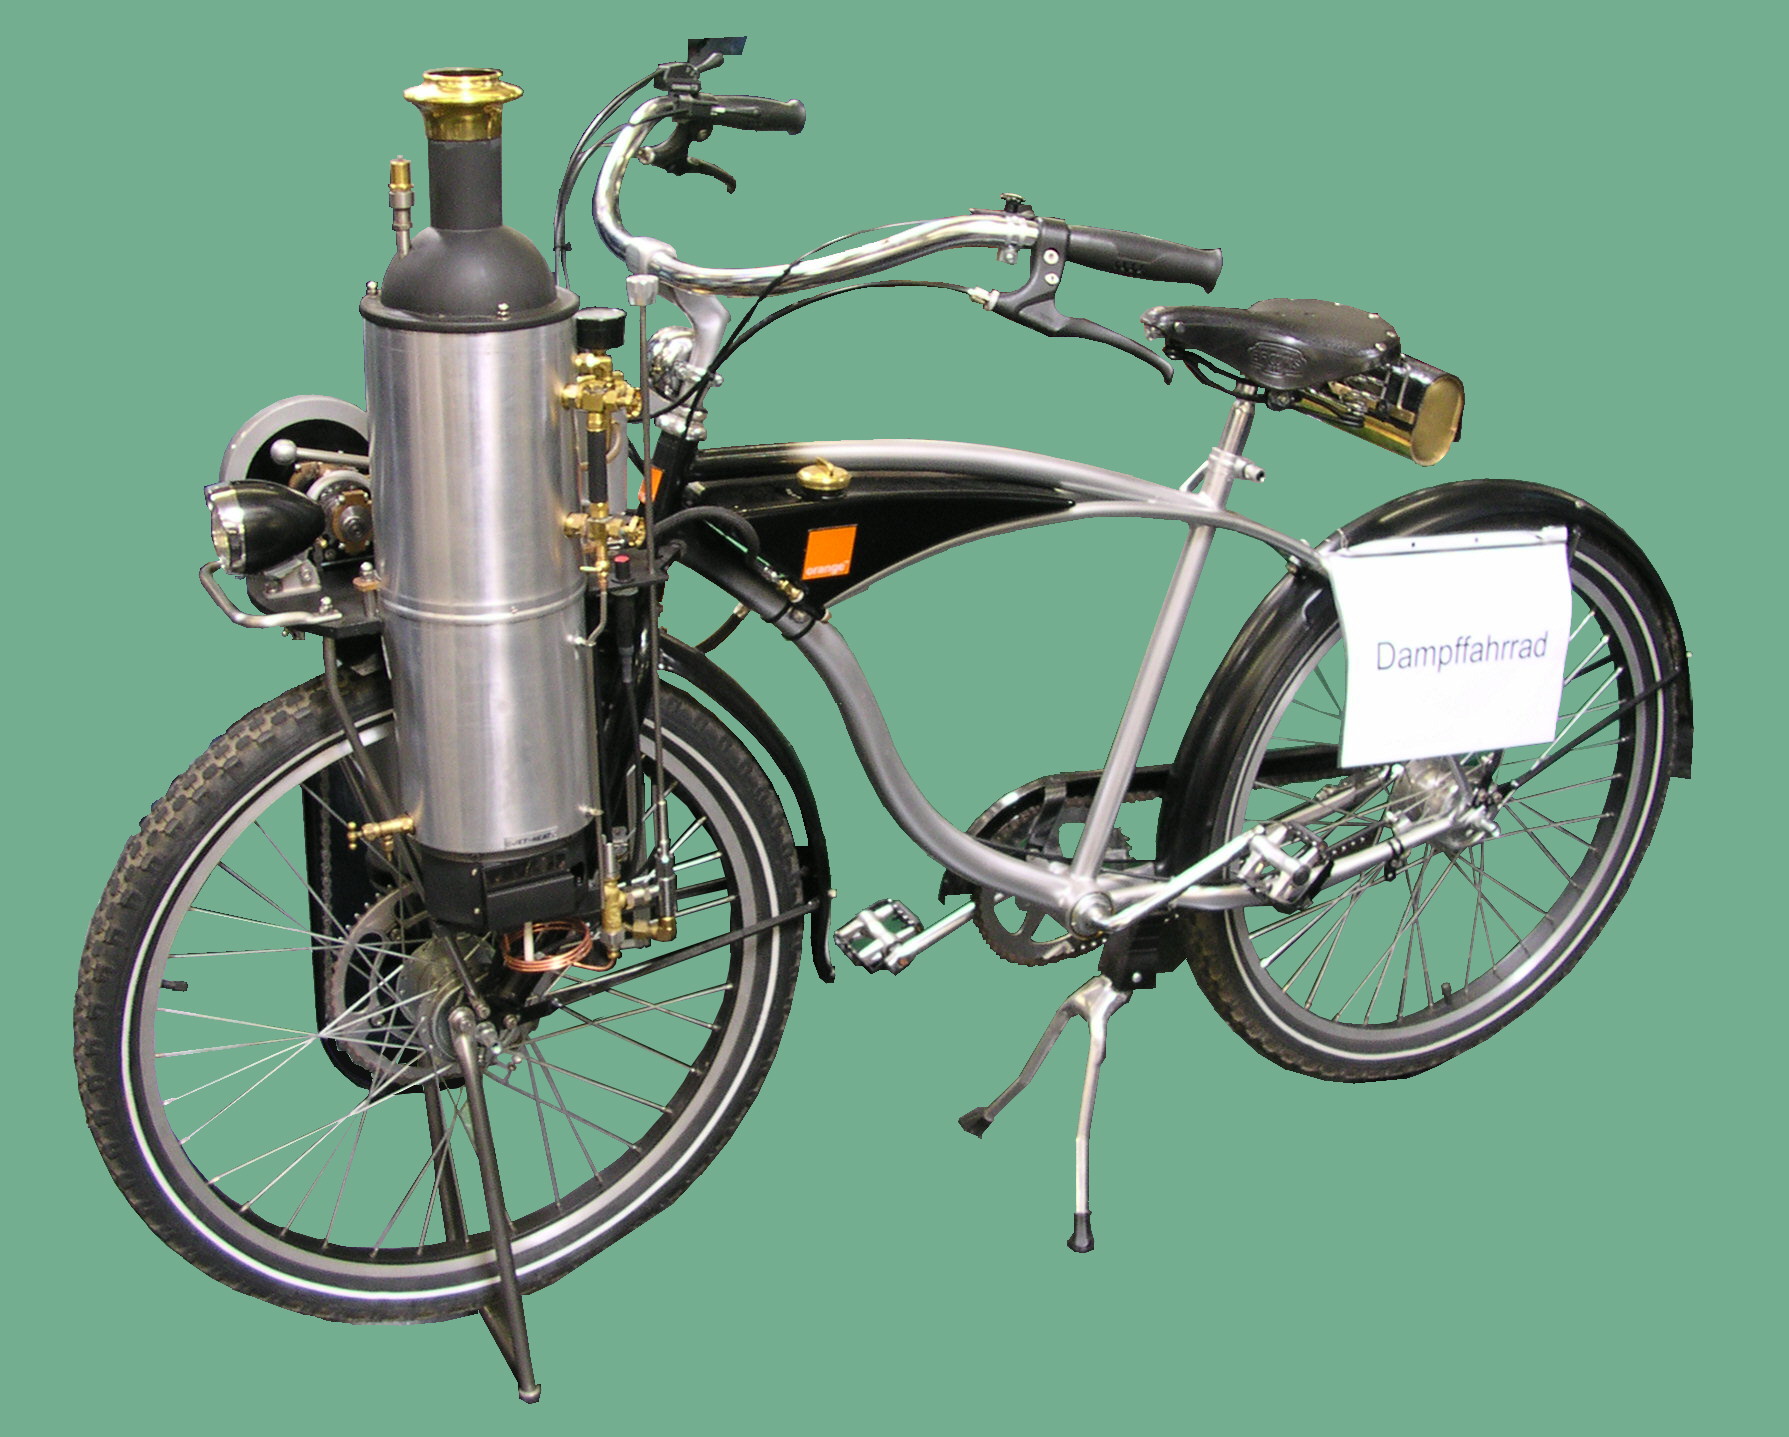 File:Pédalo Shuttle bike kit.jpg - Wikimedia Commons